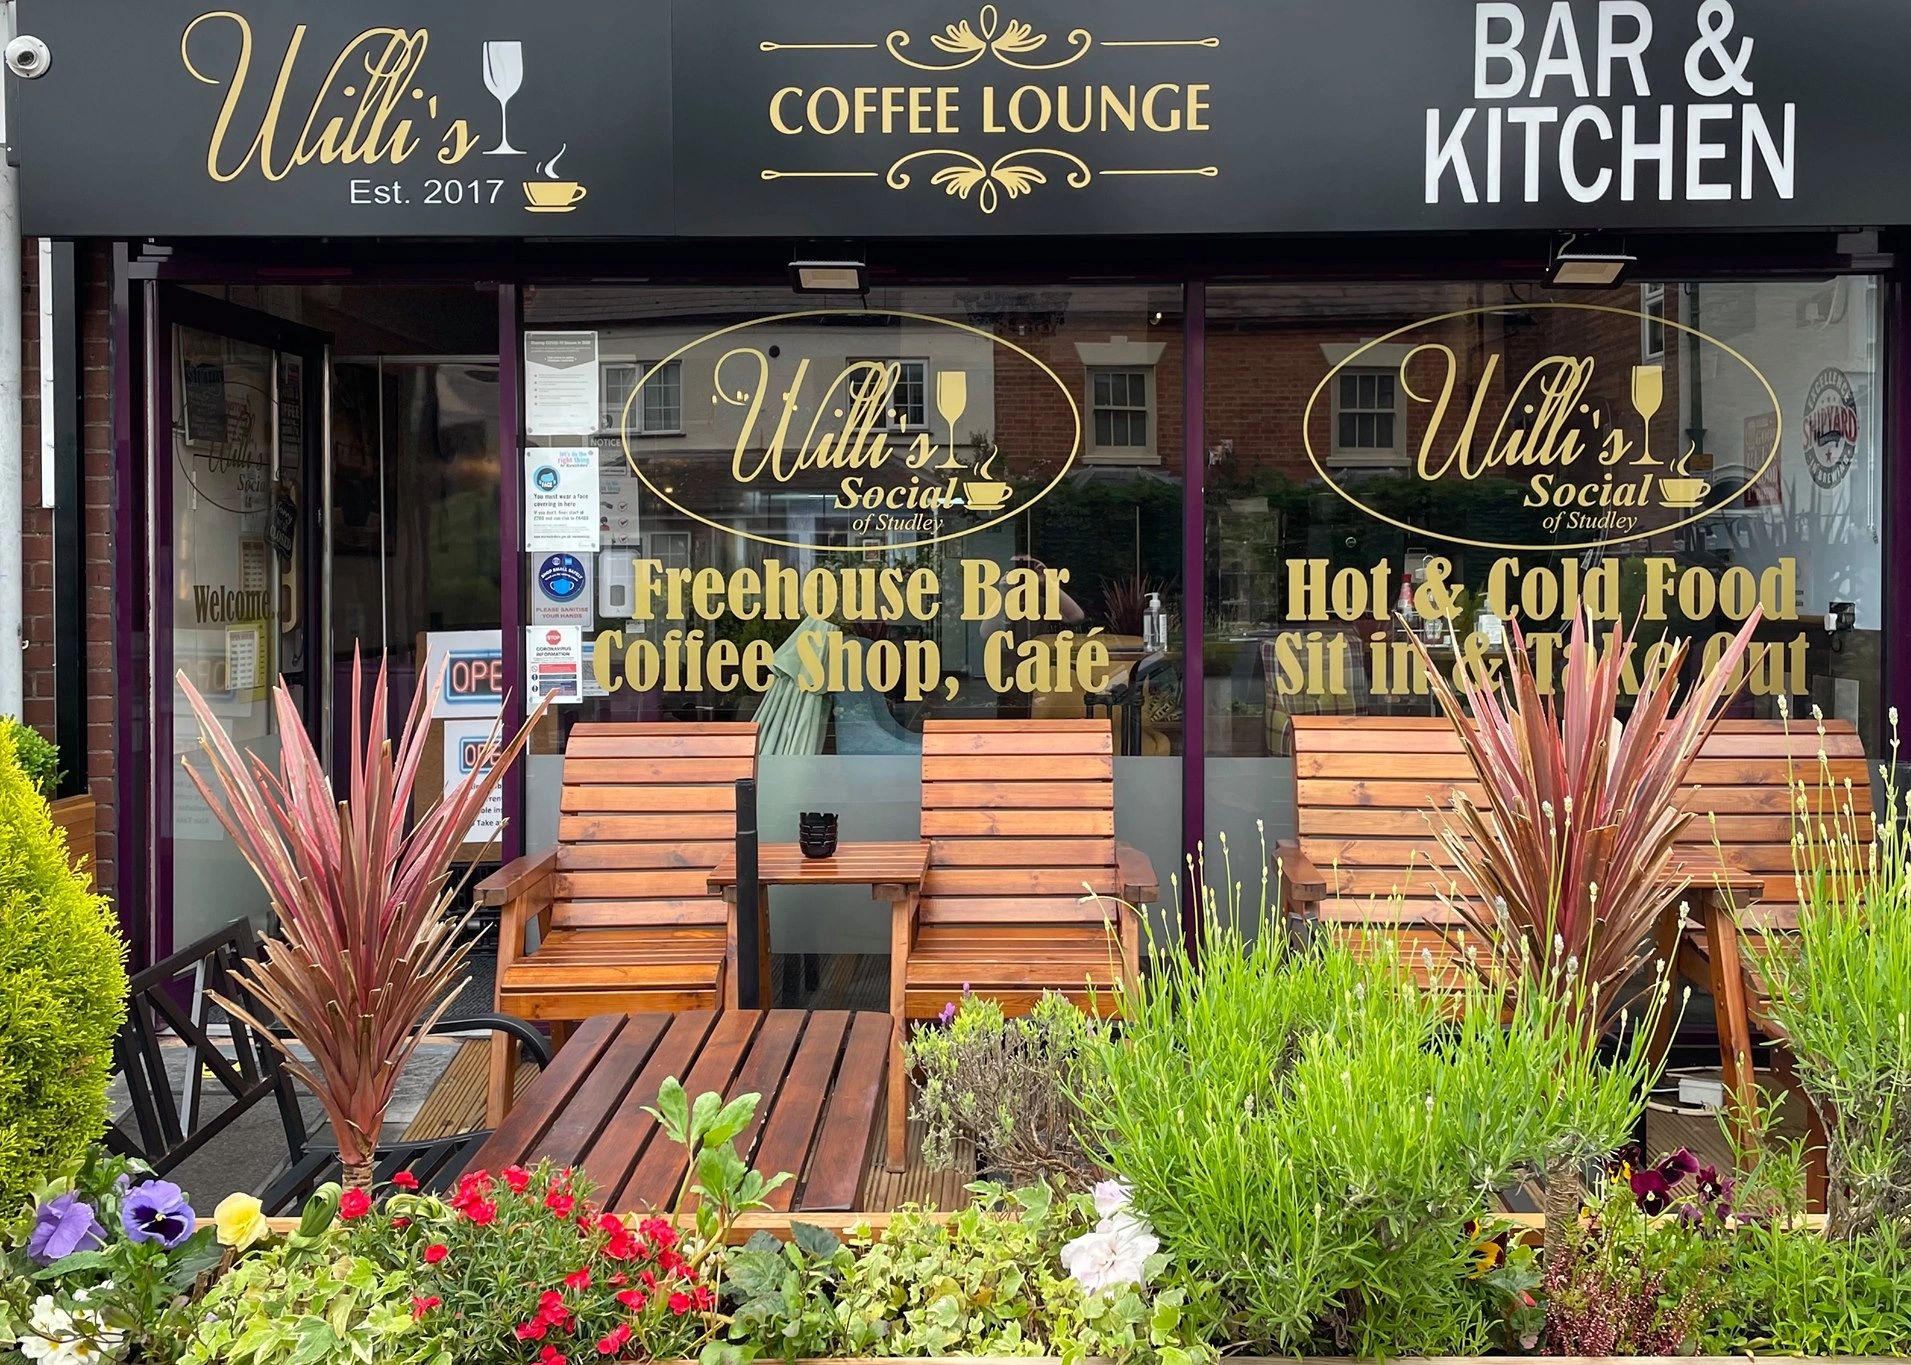 Willi’s Coffee lounge, Bar & Kitchen 